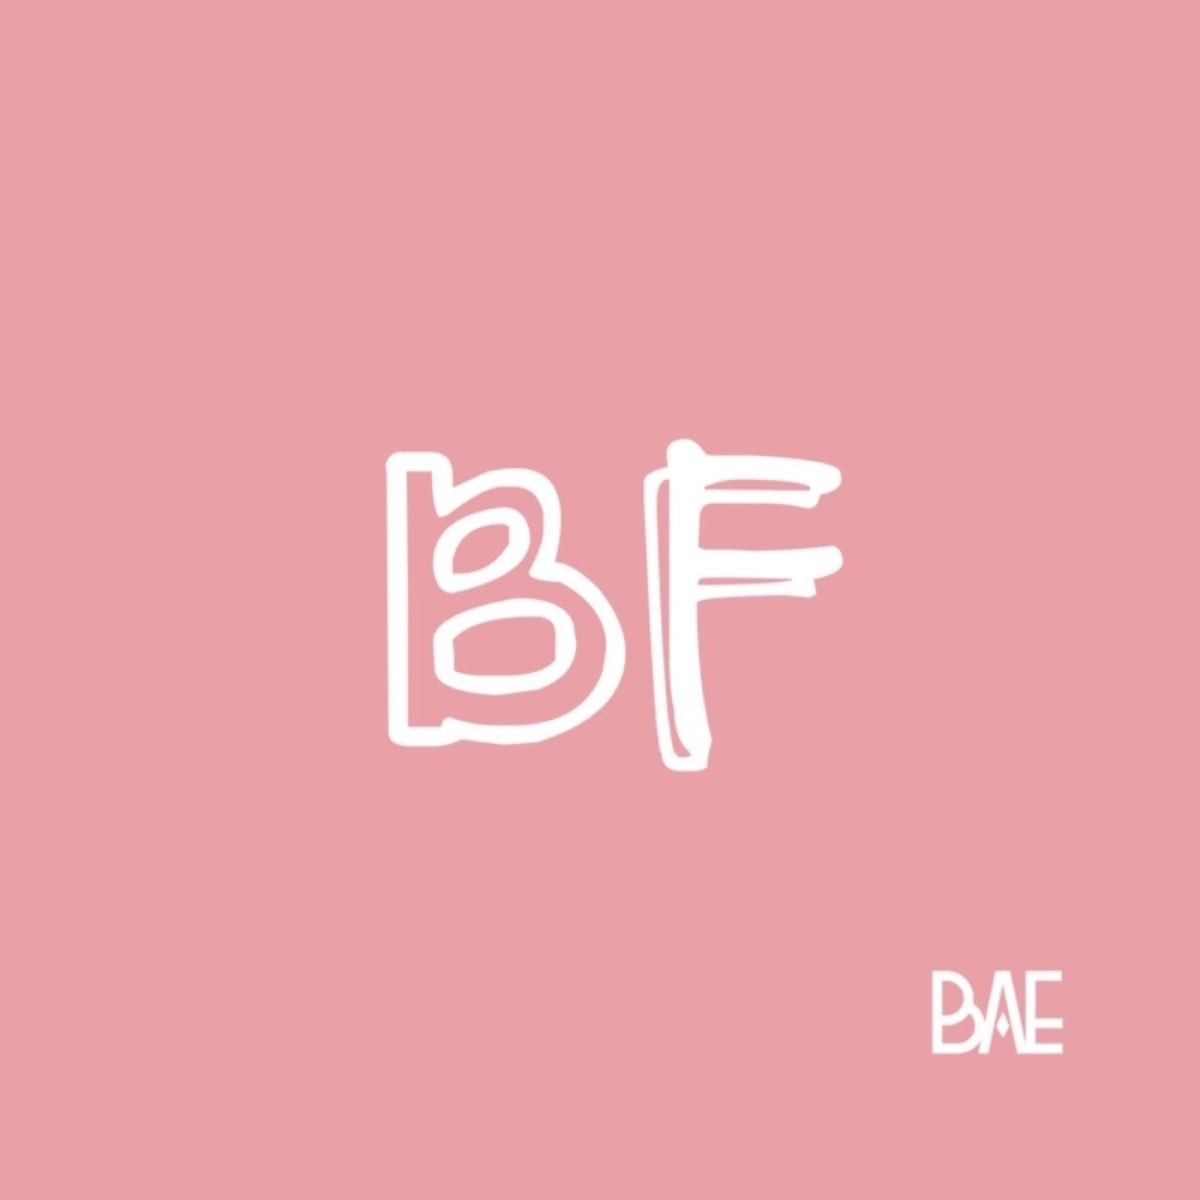 ‎Bf - Single - Album by Bae - Apple Music